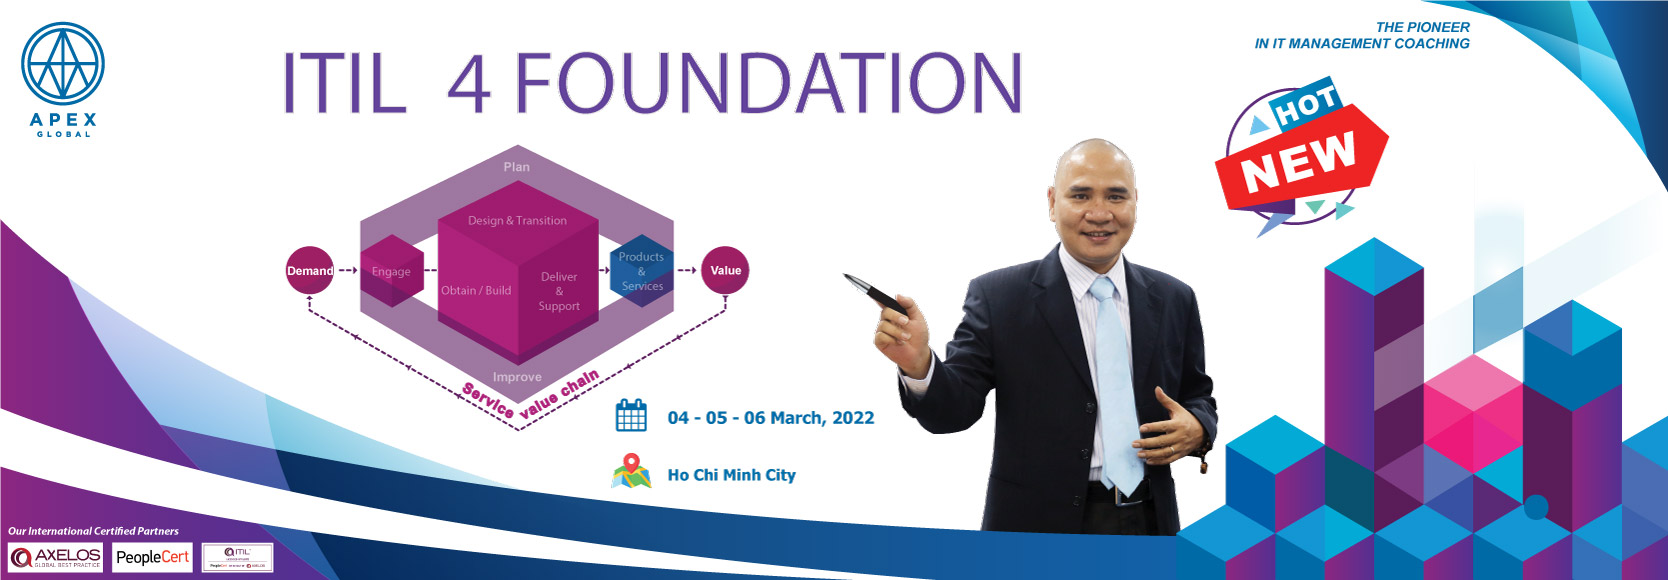 ITIL-4-Foundation-Apex-global-2-3